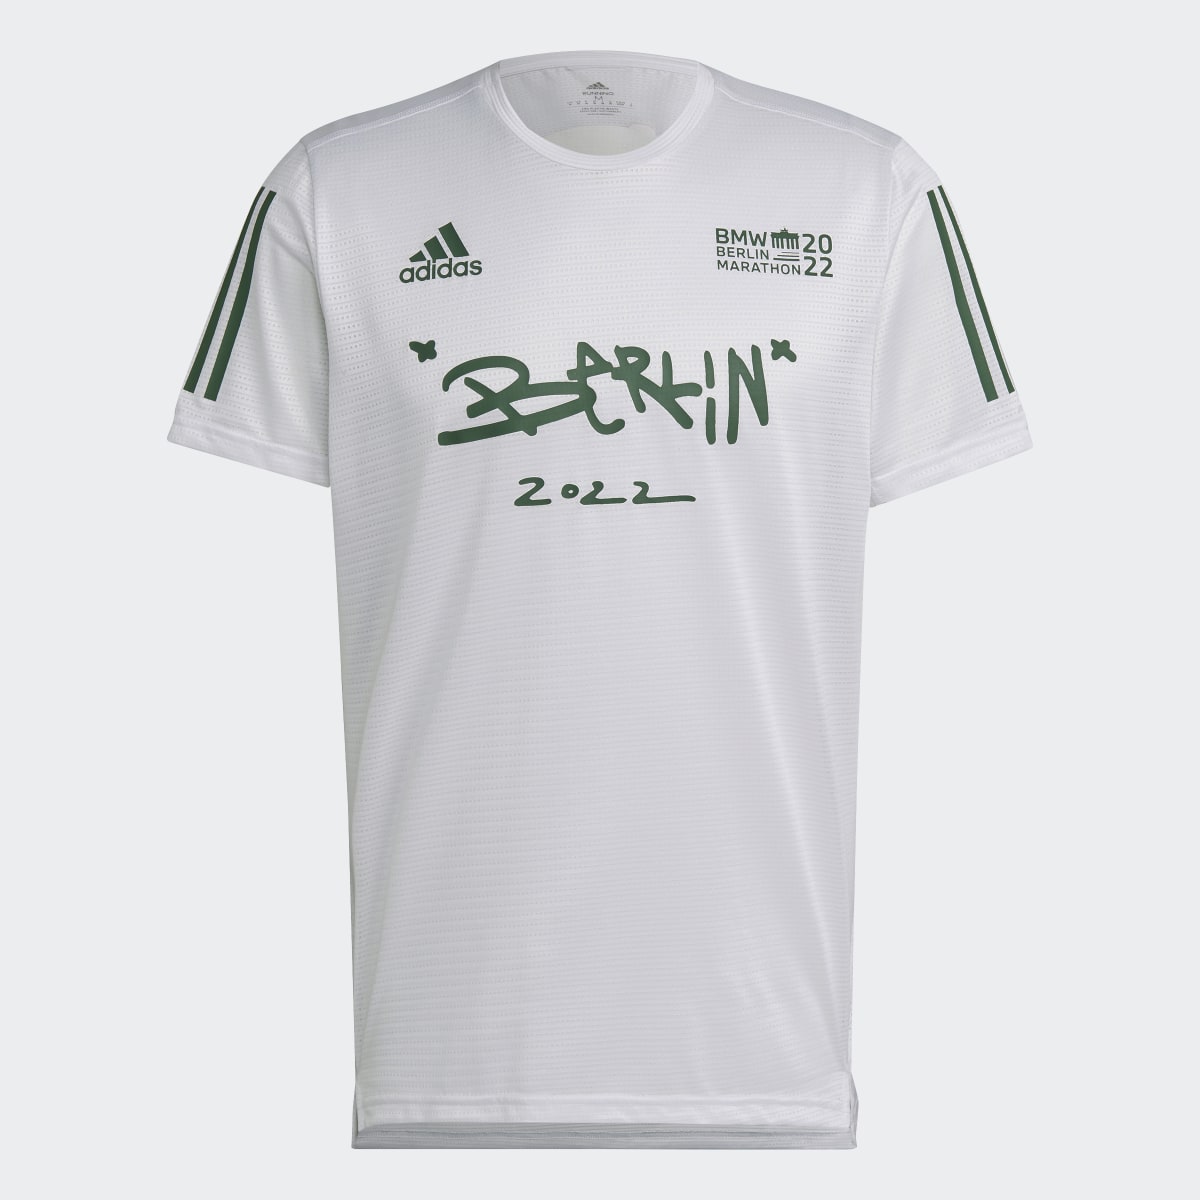 Adidas Berlin Marathon 2022 T-Shirt. 5